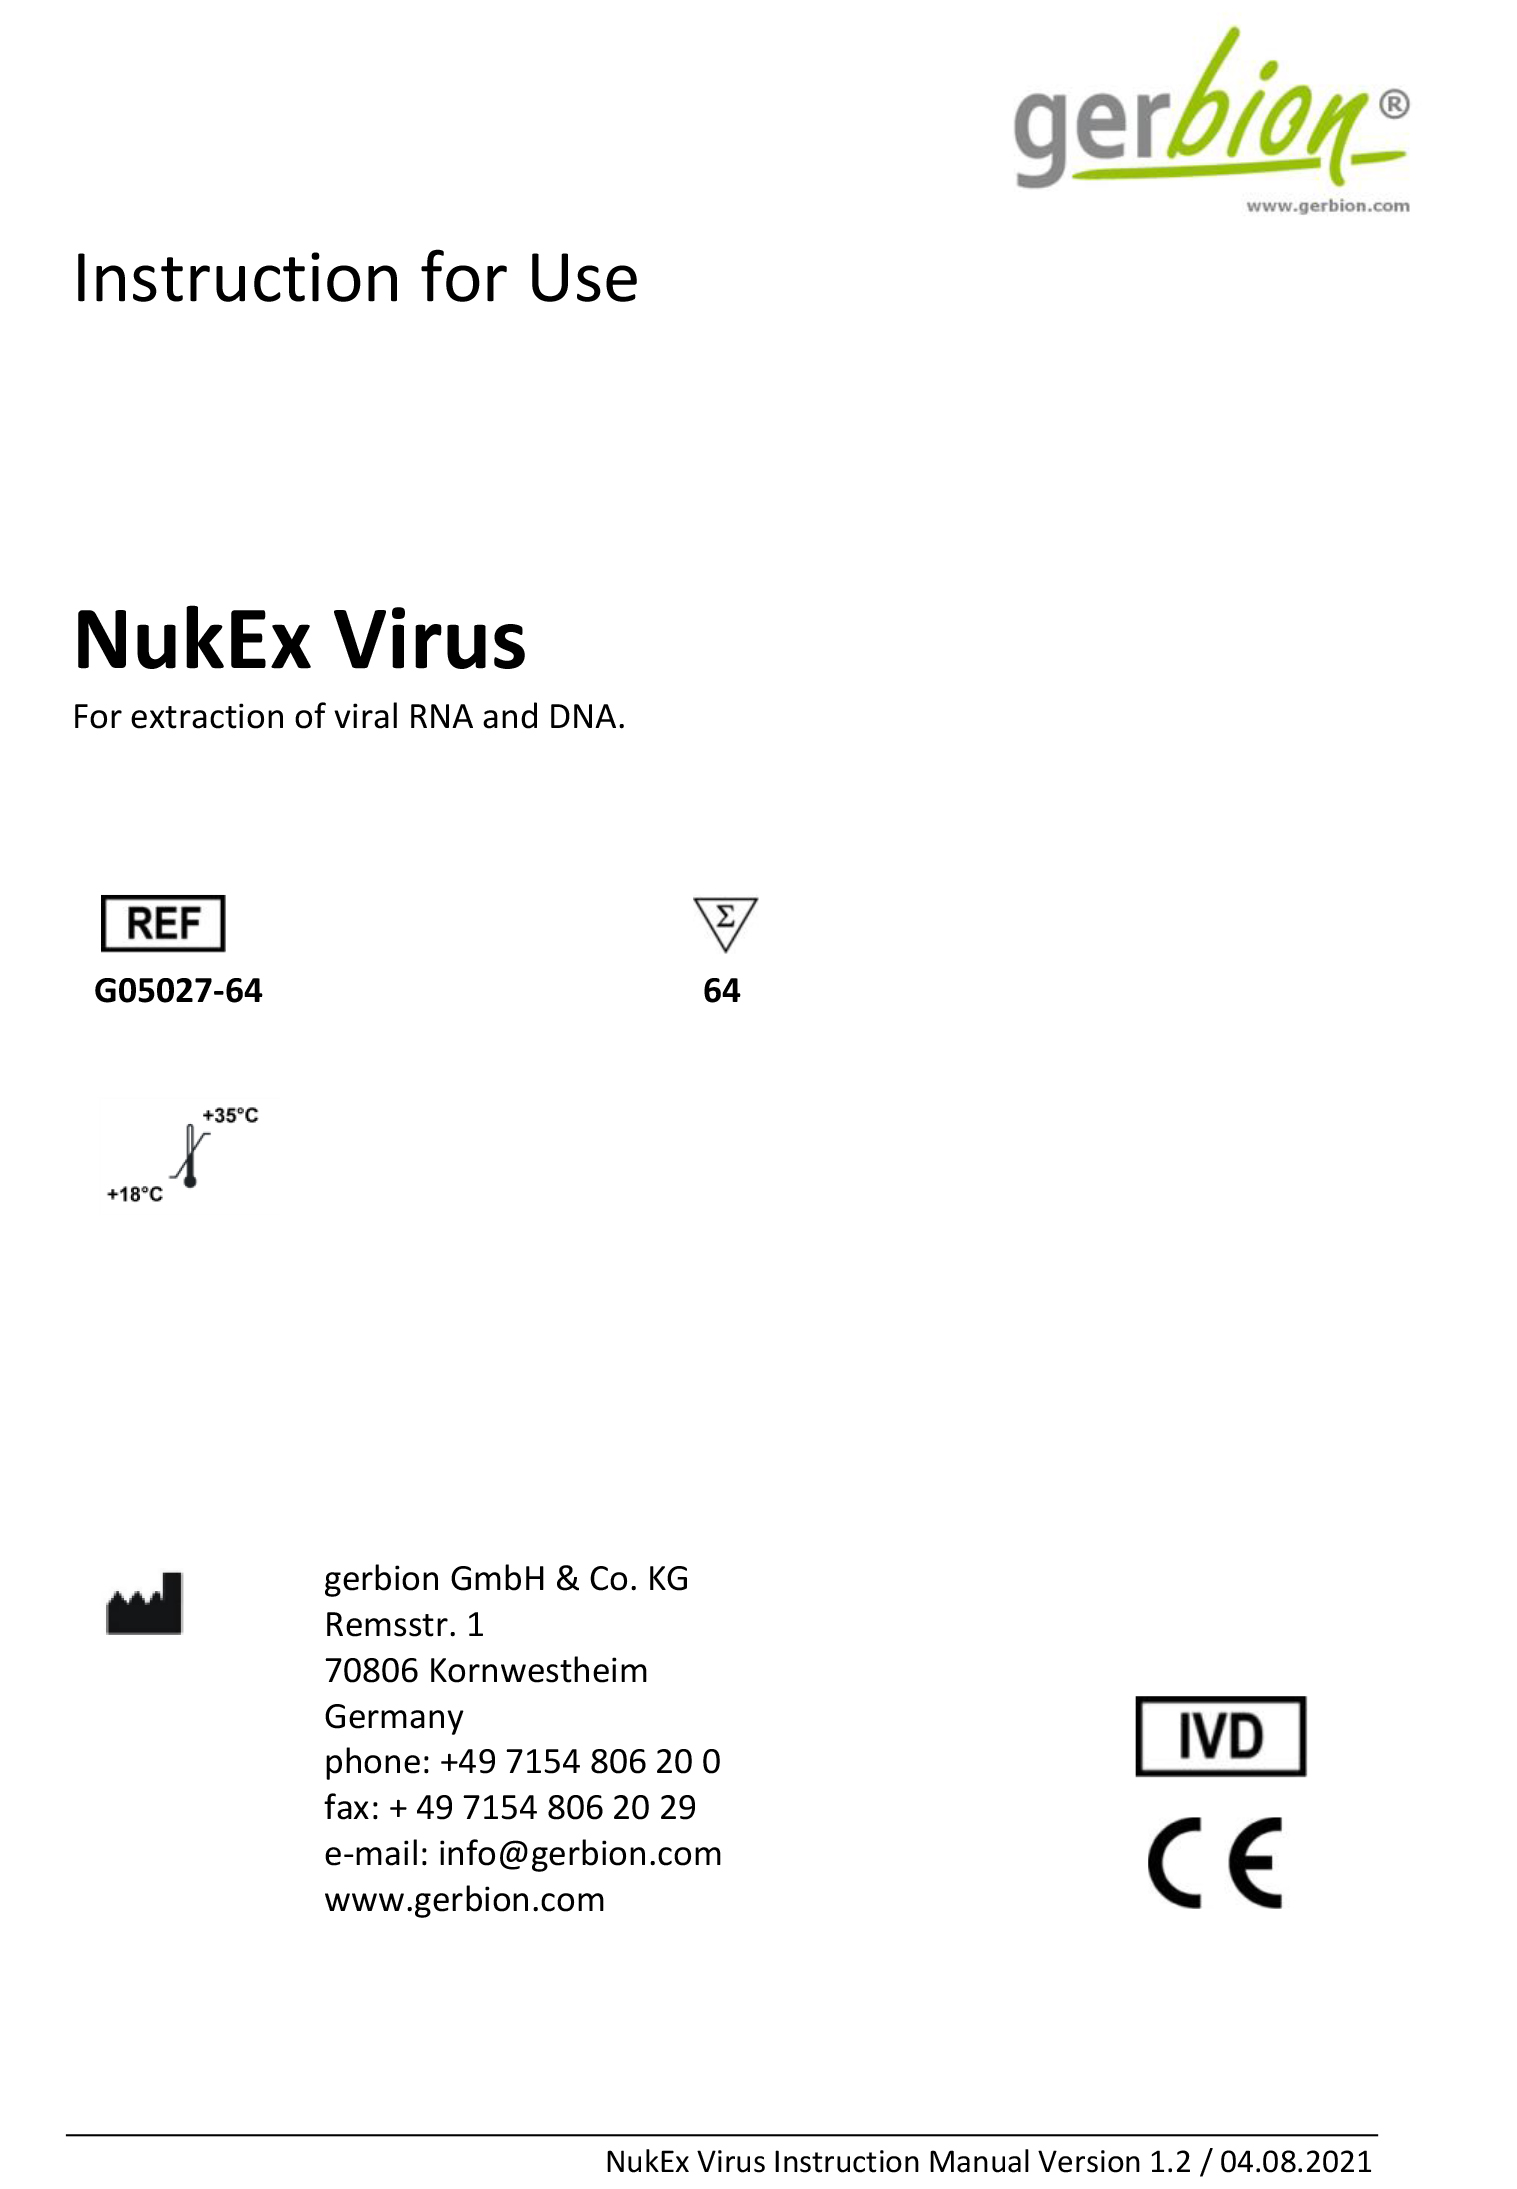 Nuxekx virus -G05027